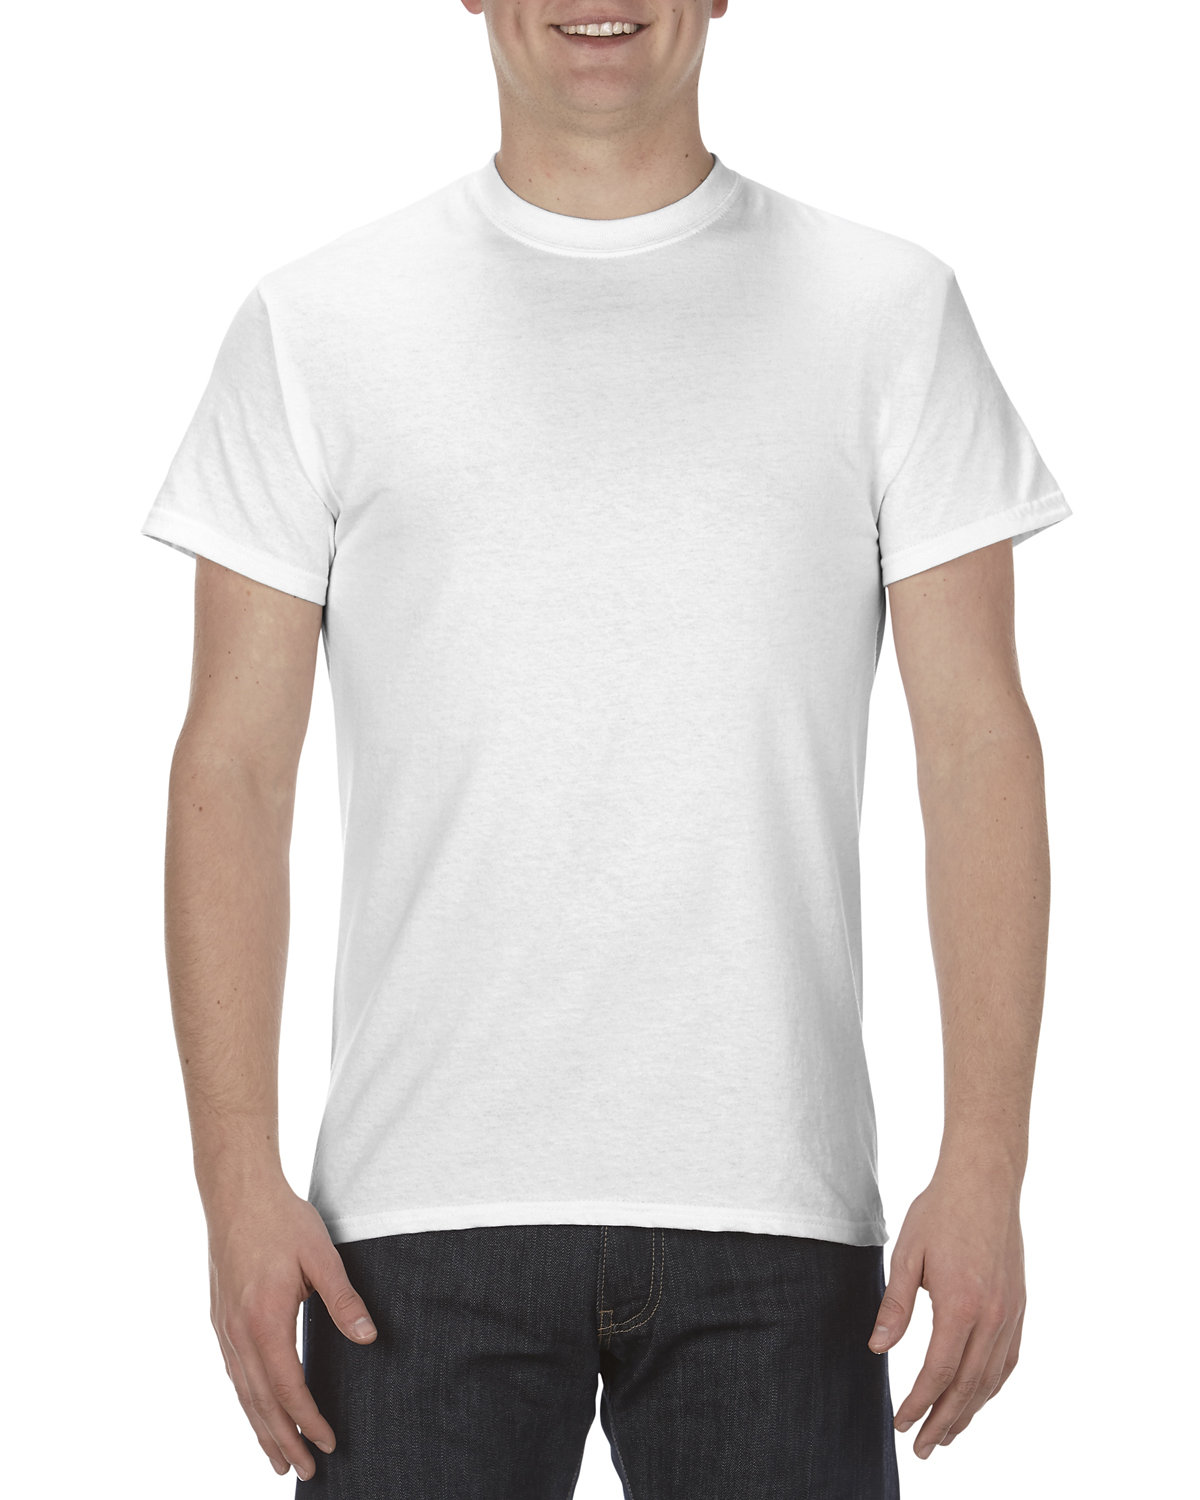 Alstyle Adult 5.1 oz., 100% Soft Spun Cotton T-Shirt WHITE 